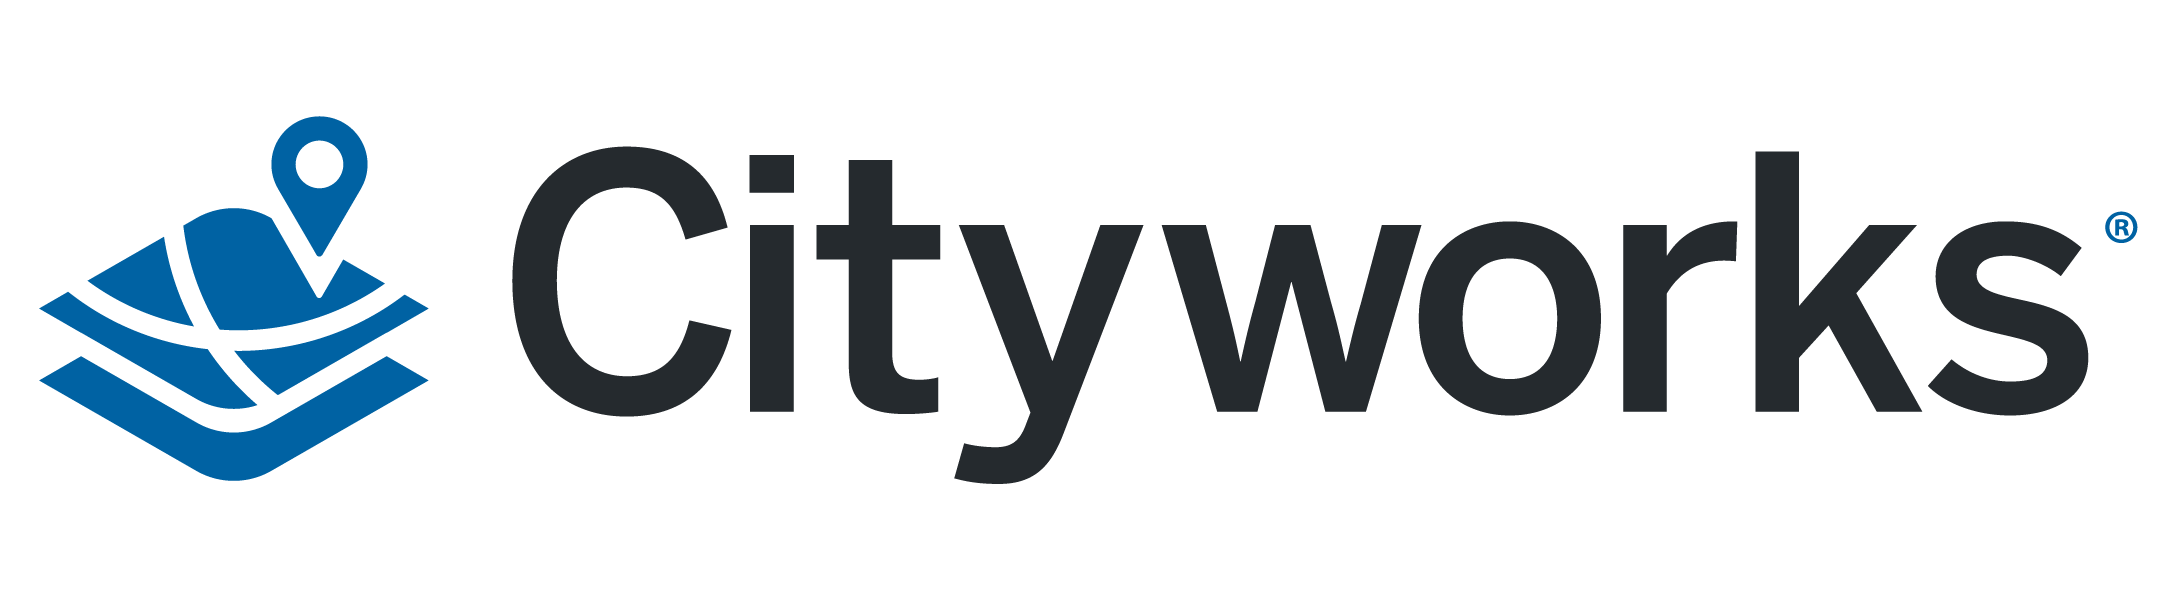 Cityworks Logo Redesign_Color-04